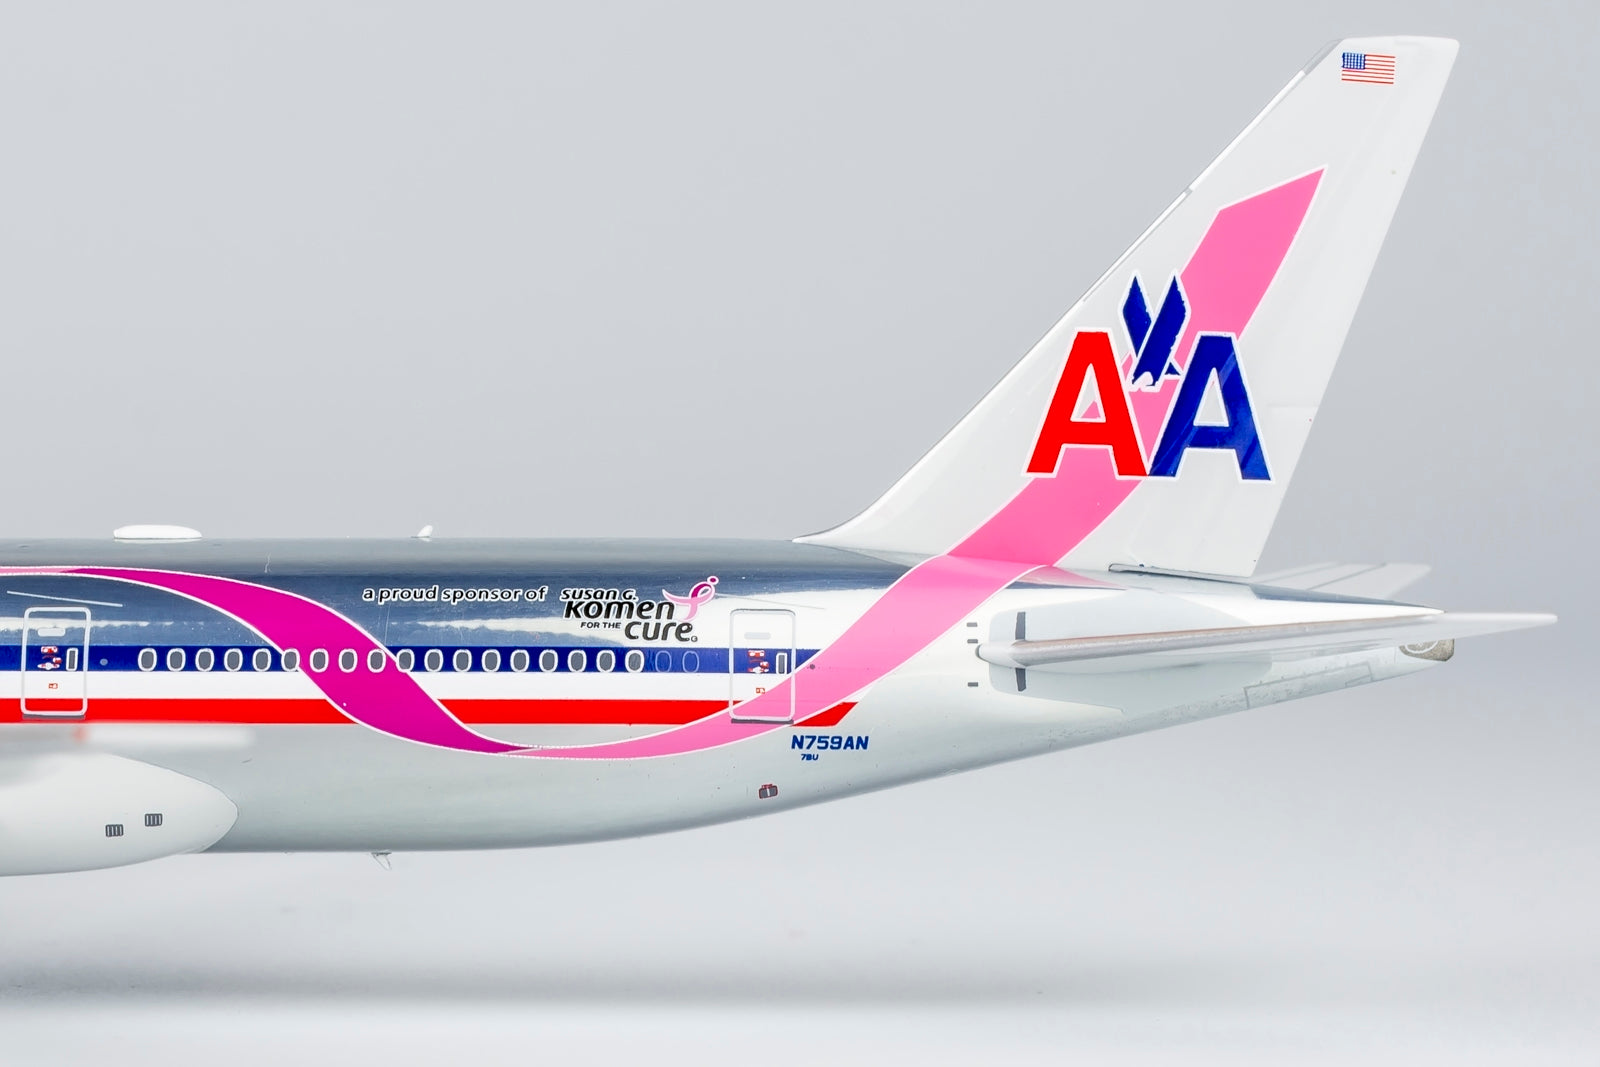 1:400 American Airlines B777-200ER Pink Ribbon, polished. NG Models